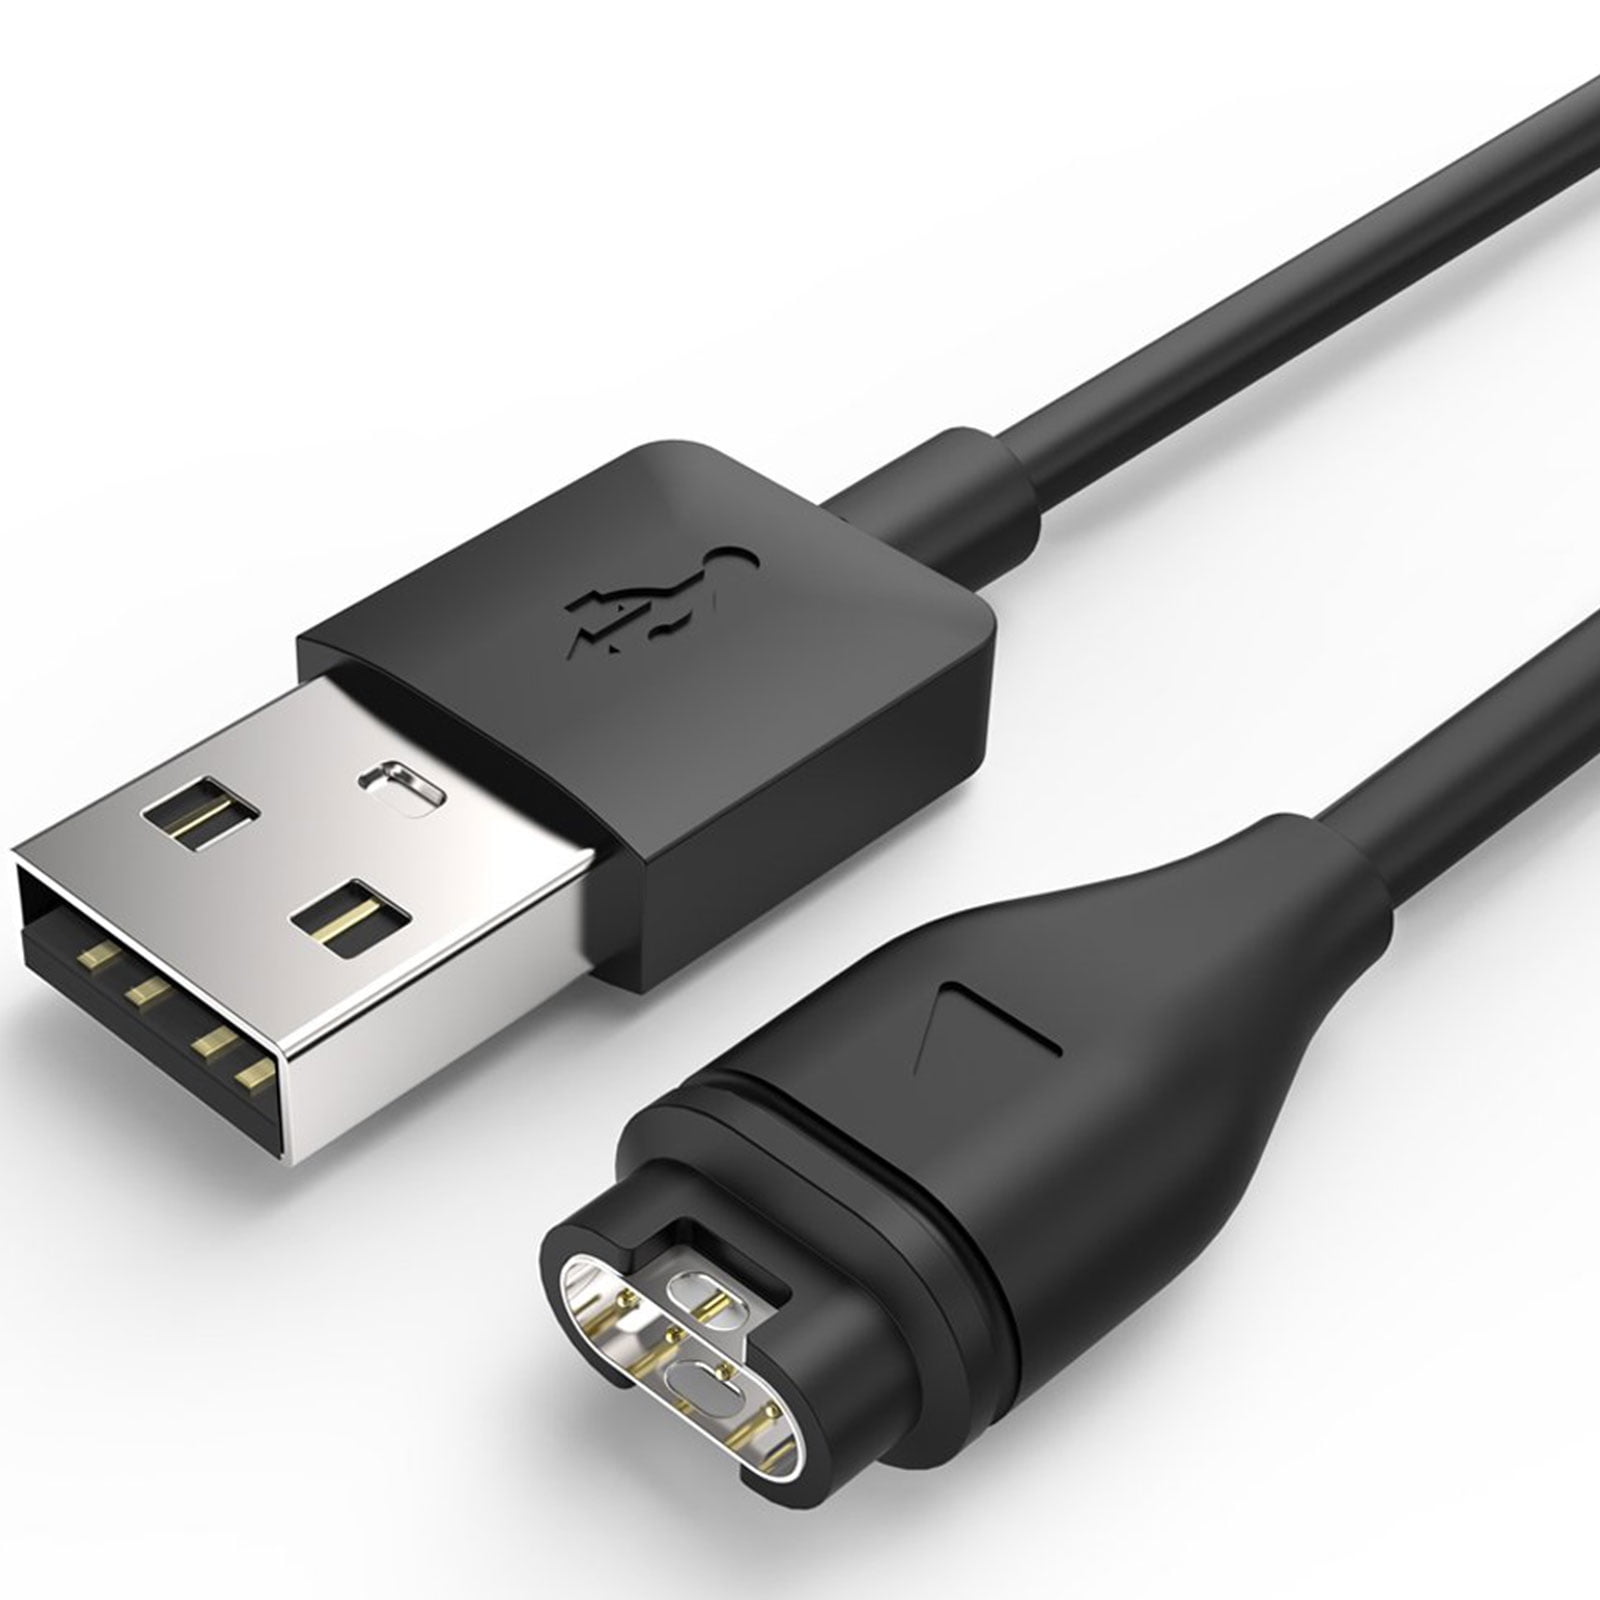 USB Charger Charging Cable Cord for Garmin Fenix 5//5S//5X Vivoactive 3 Vivosport